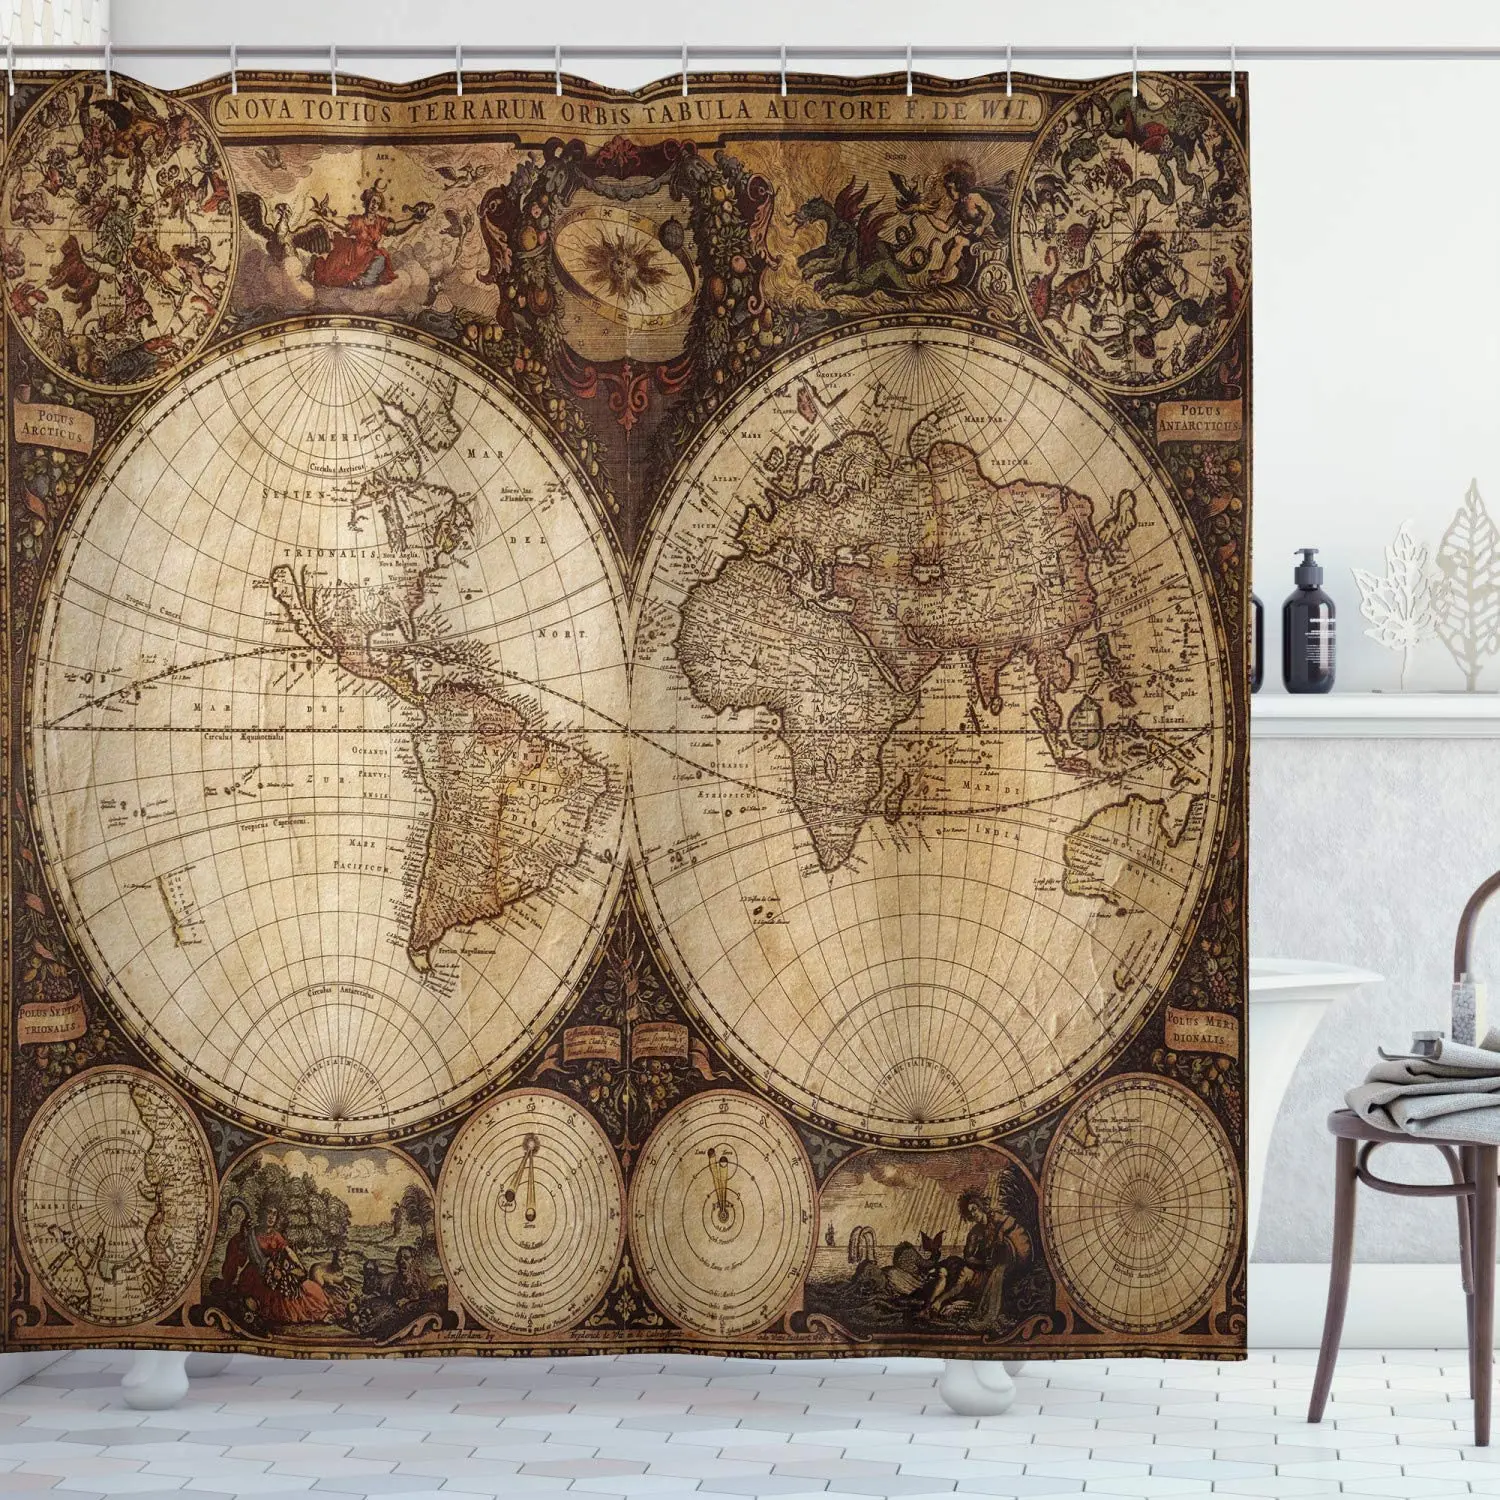 

World Map Shower Curtain, Old World Map Drawn in 1720s Nostalgic Style Art Historical Atlas Vintage Fabric Bathroom Decor Set